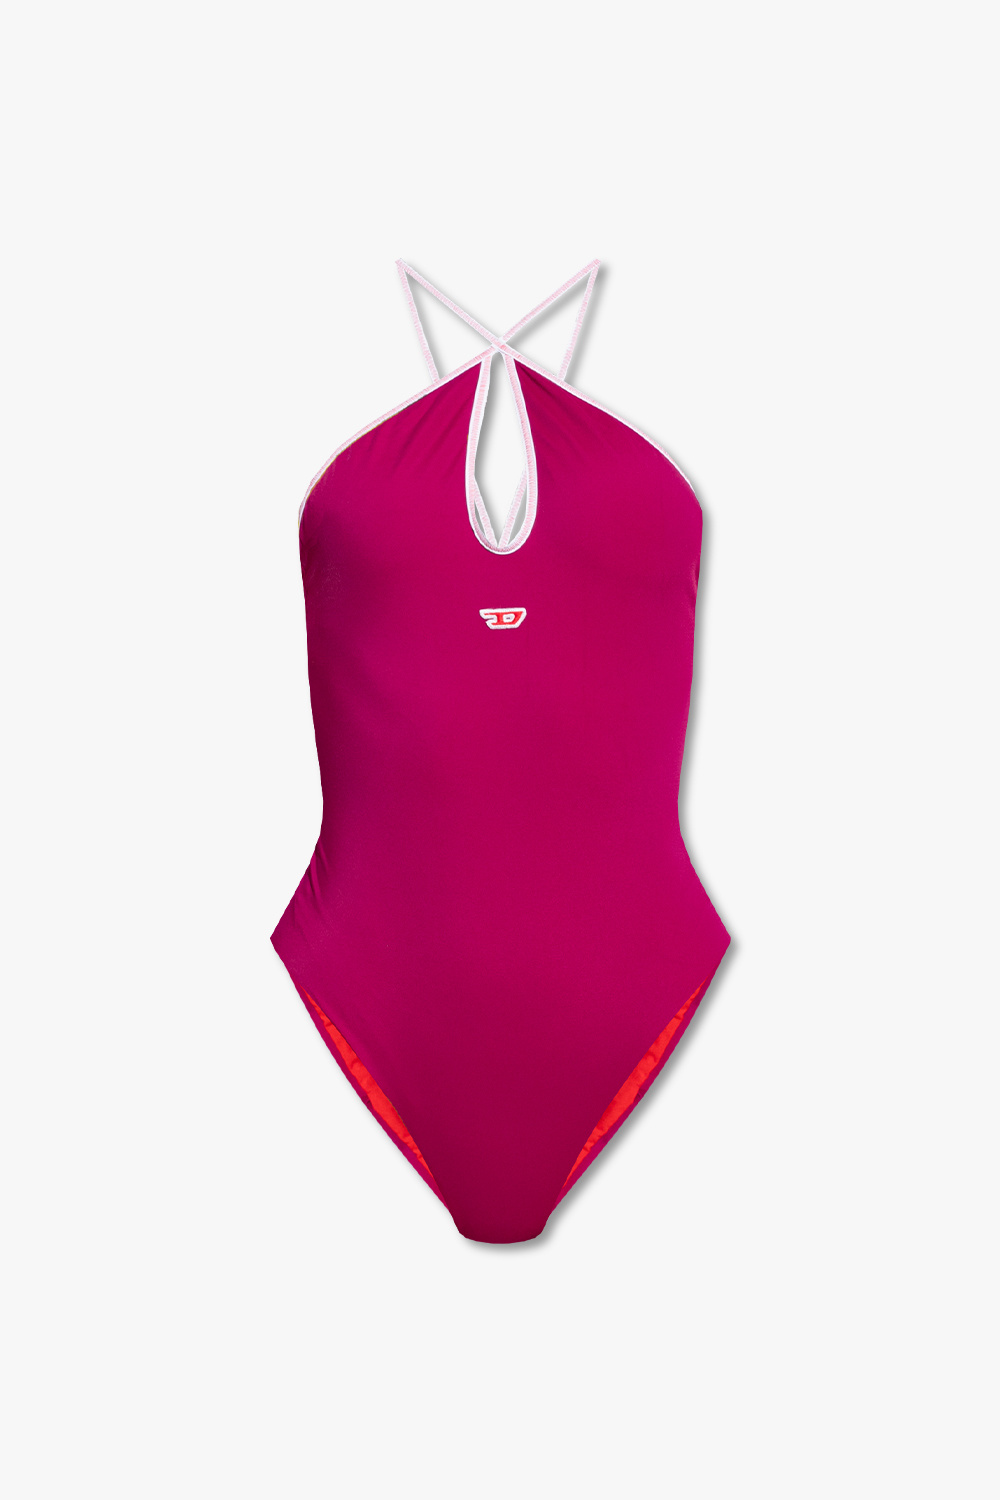 Purple ‘BFSW-MARI’ one-piece swimsuit Diesel - Vitkac Germany